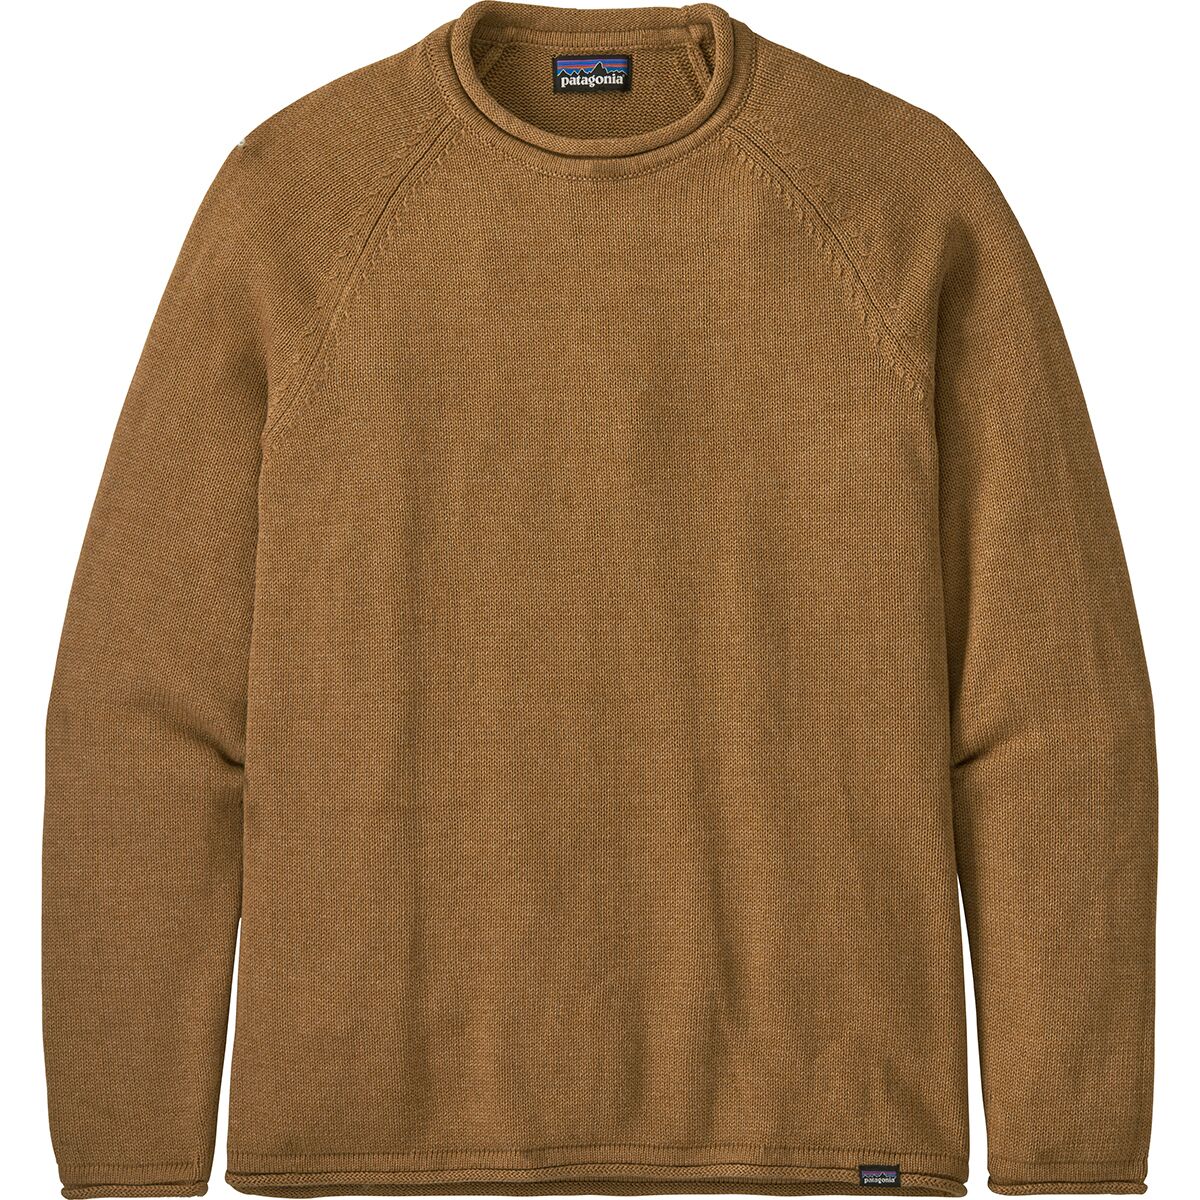 Textured Stripe THERMOLITE® Sweater